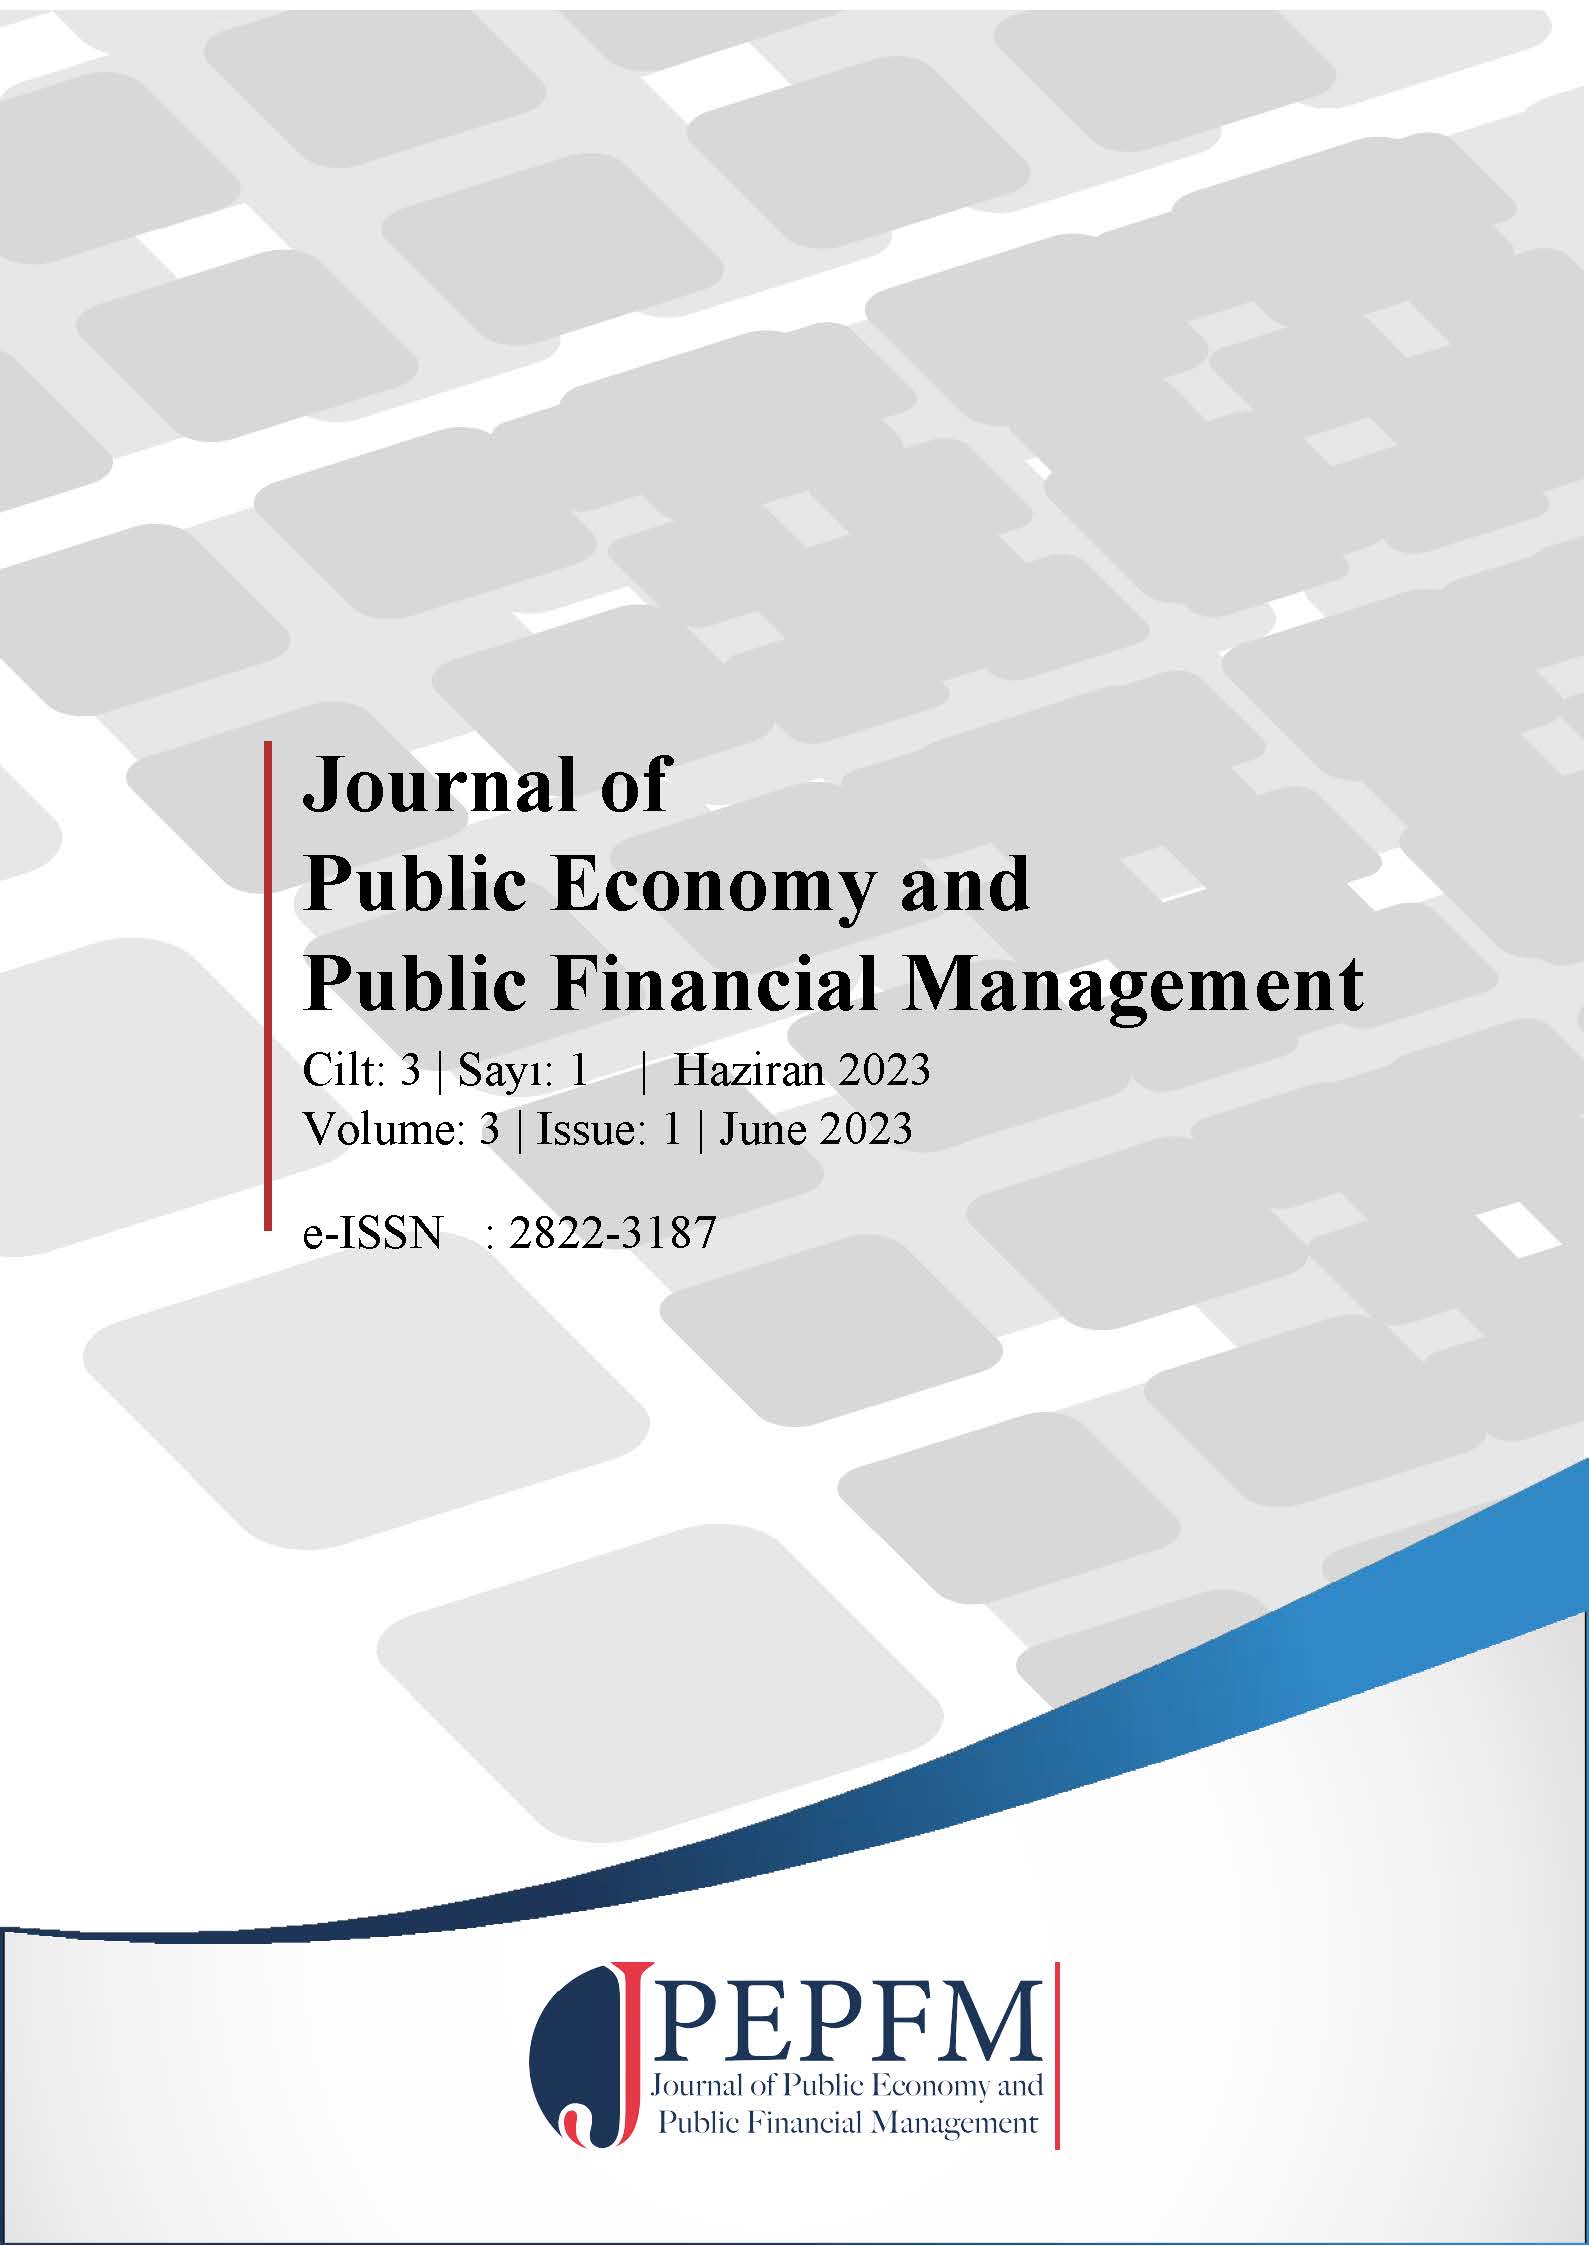 					Cilt 3 Sayı 1 (2023): Journal of Public Economy and Public Financial Management Gör
				